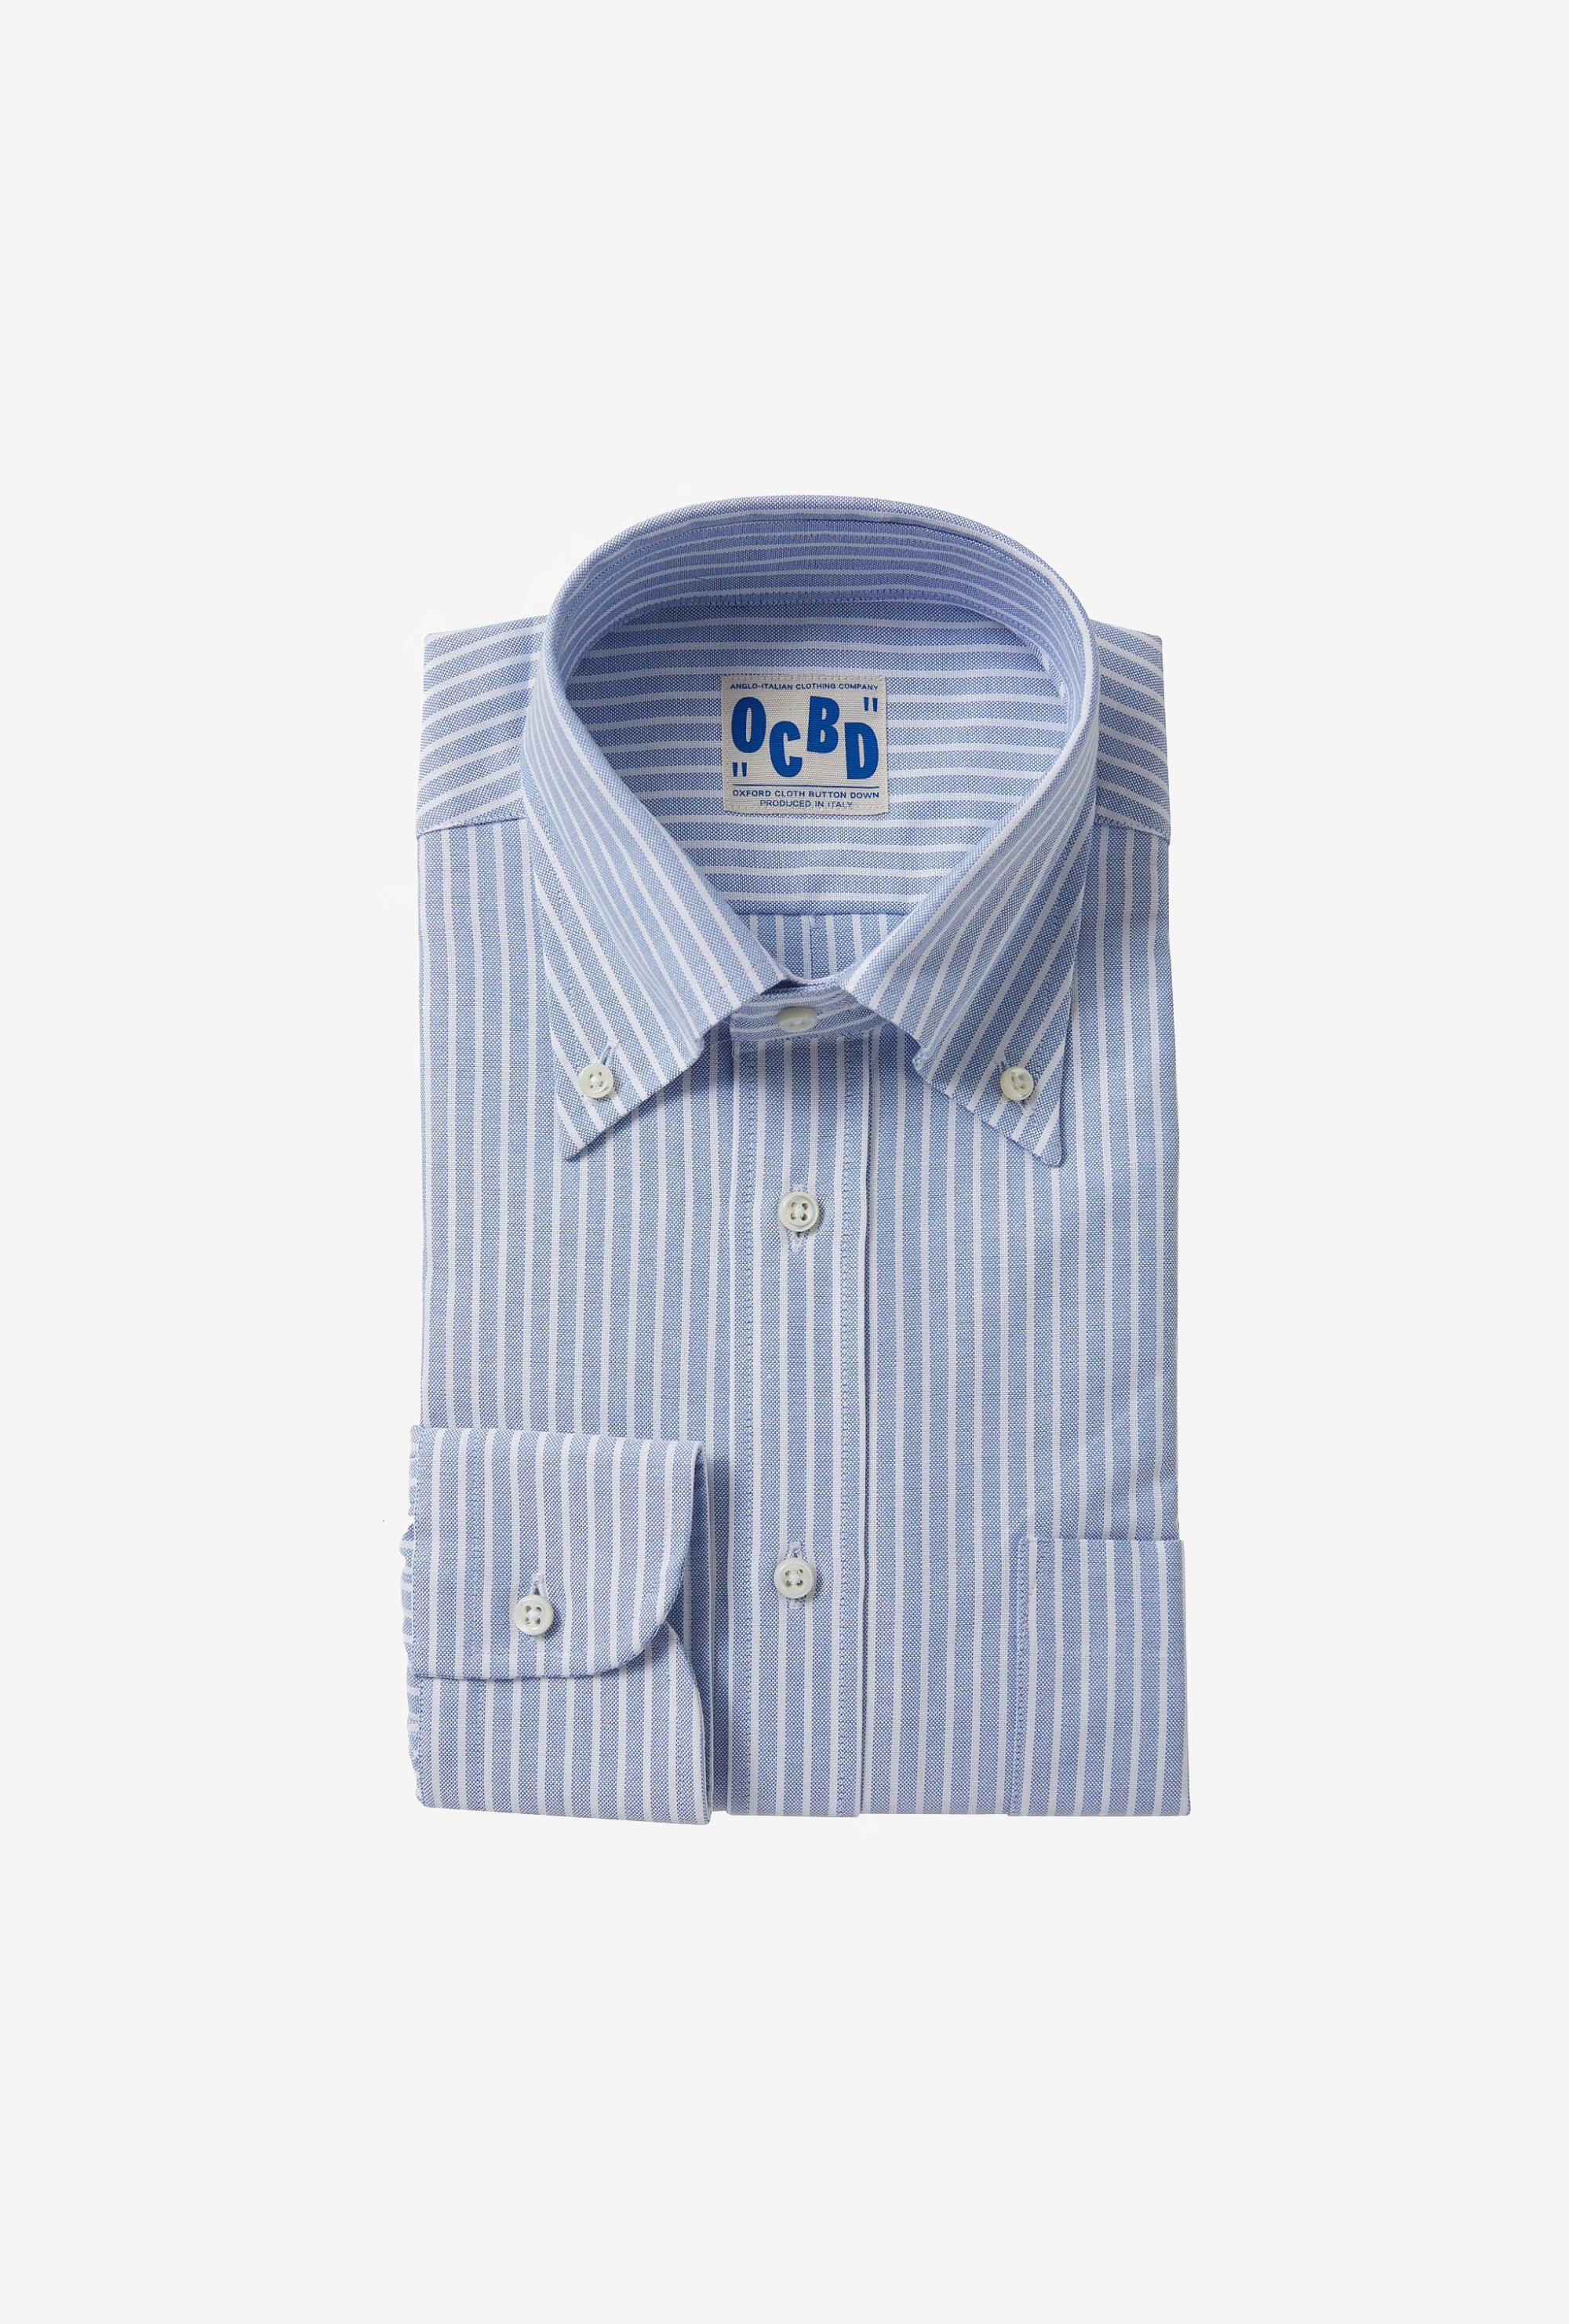 OCBD Shirt Reverse Stripe Blue Oxford